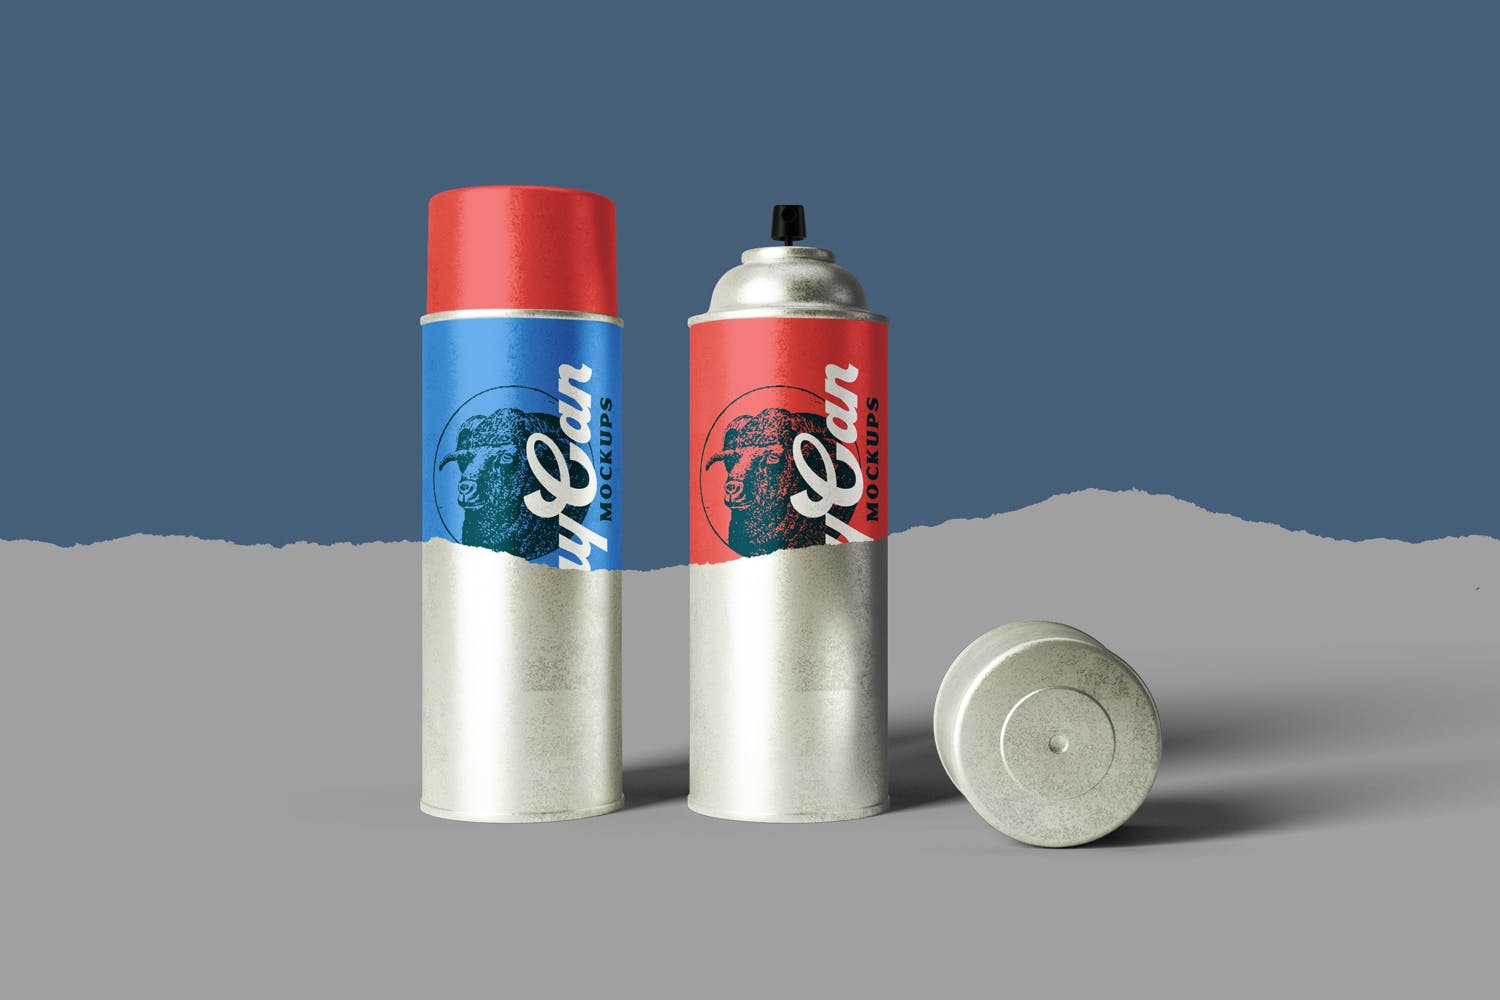 液压喷雾罐外观设计样机模板 Spray Can Mockups插图(7)